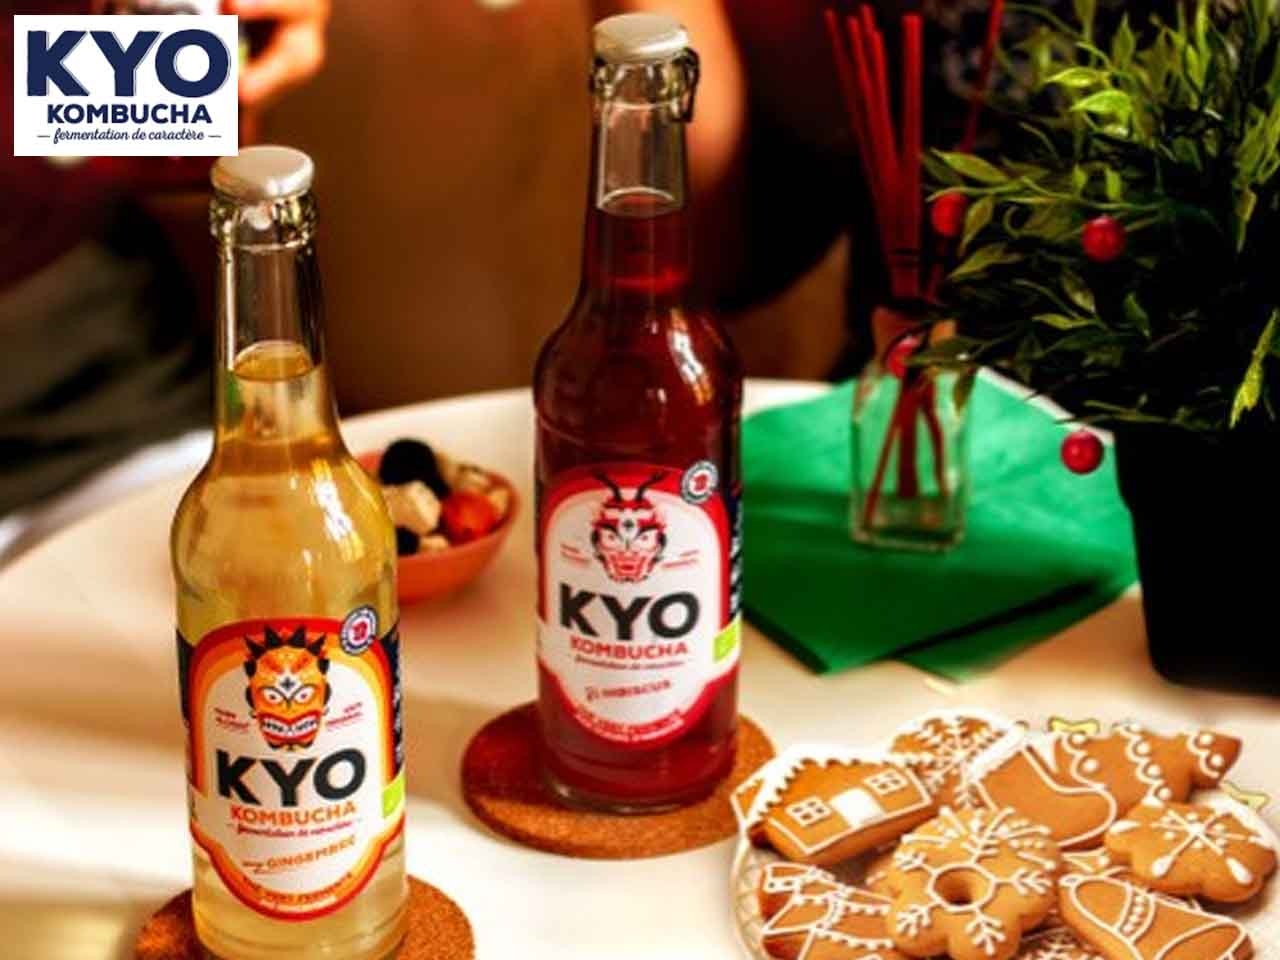 Kyo Kombucha présente son apéritif festif et sain pour Noël